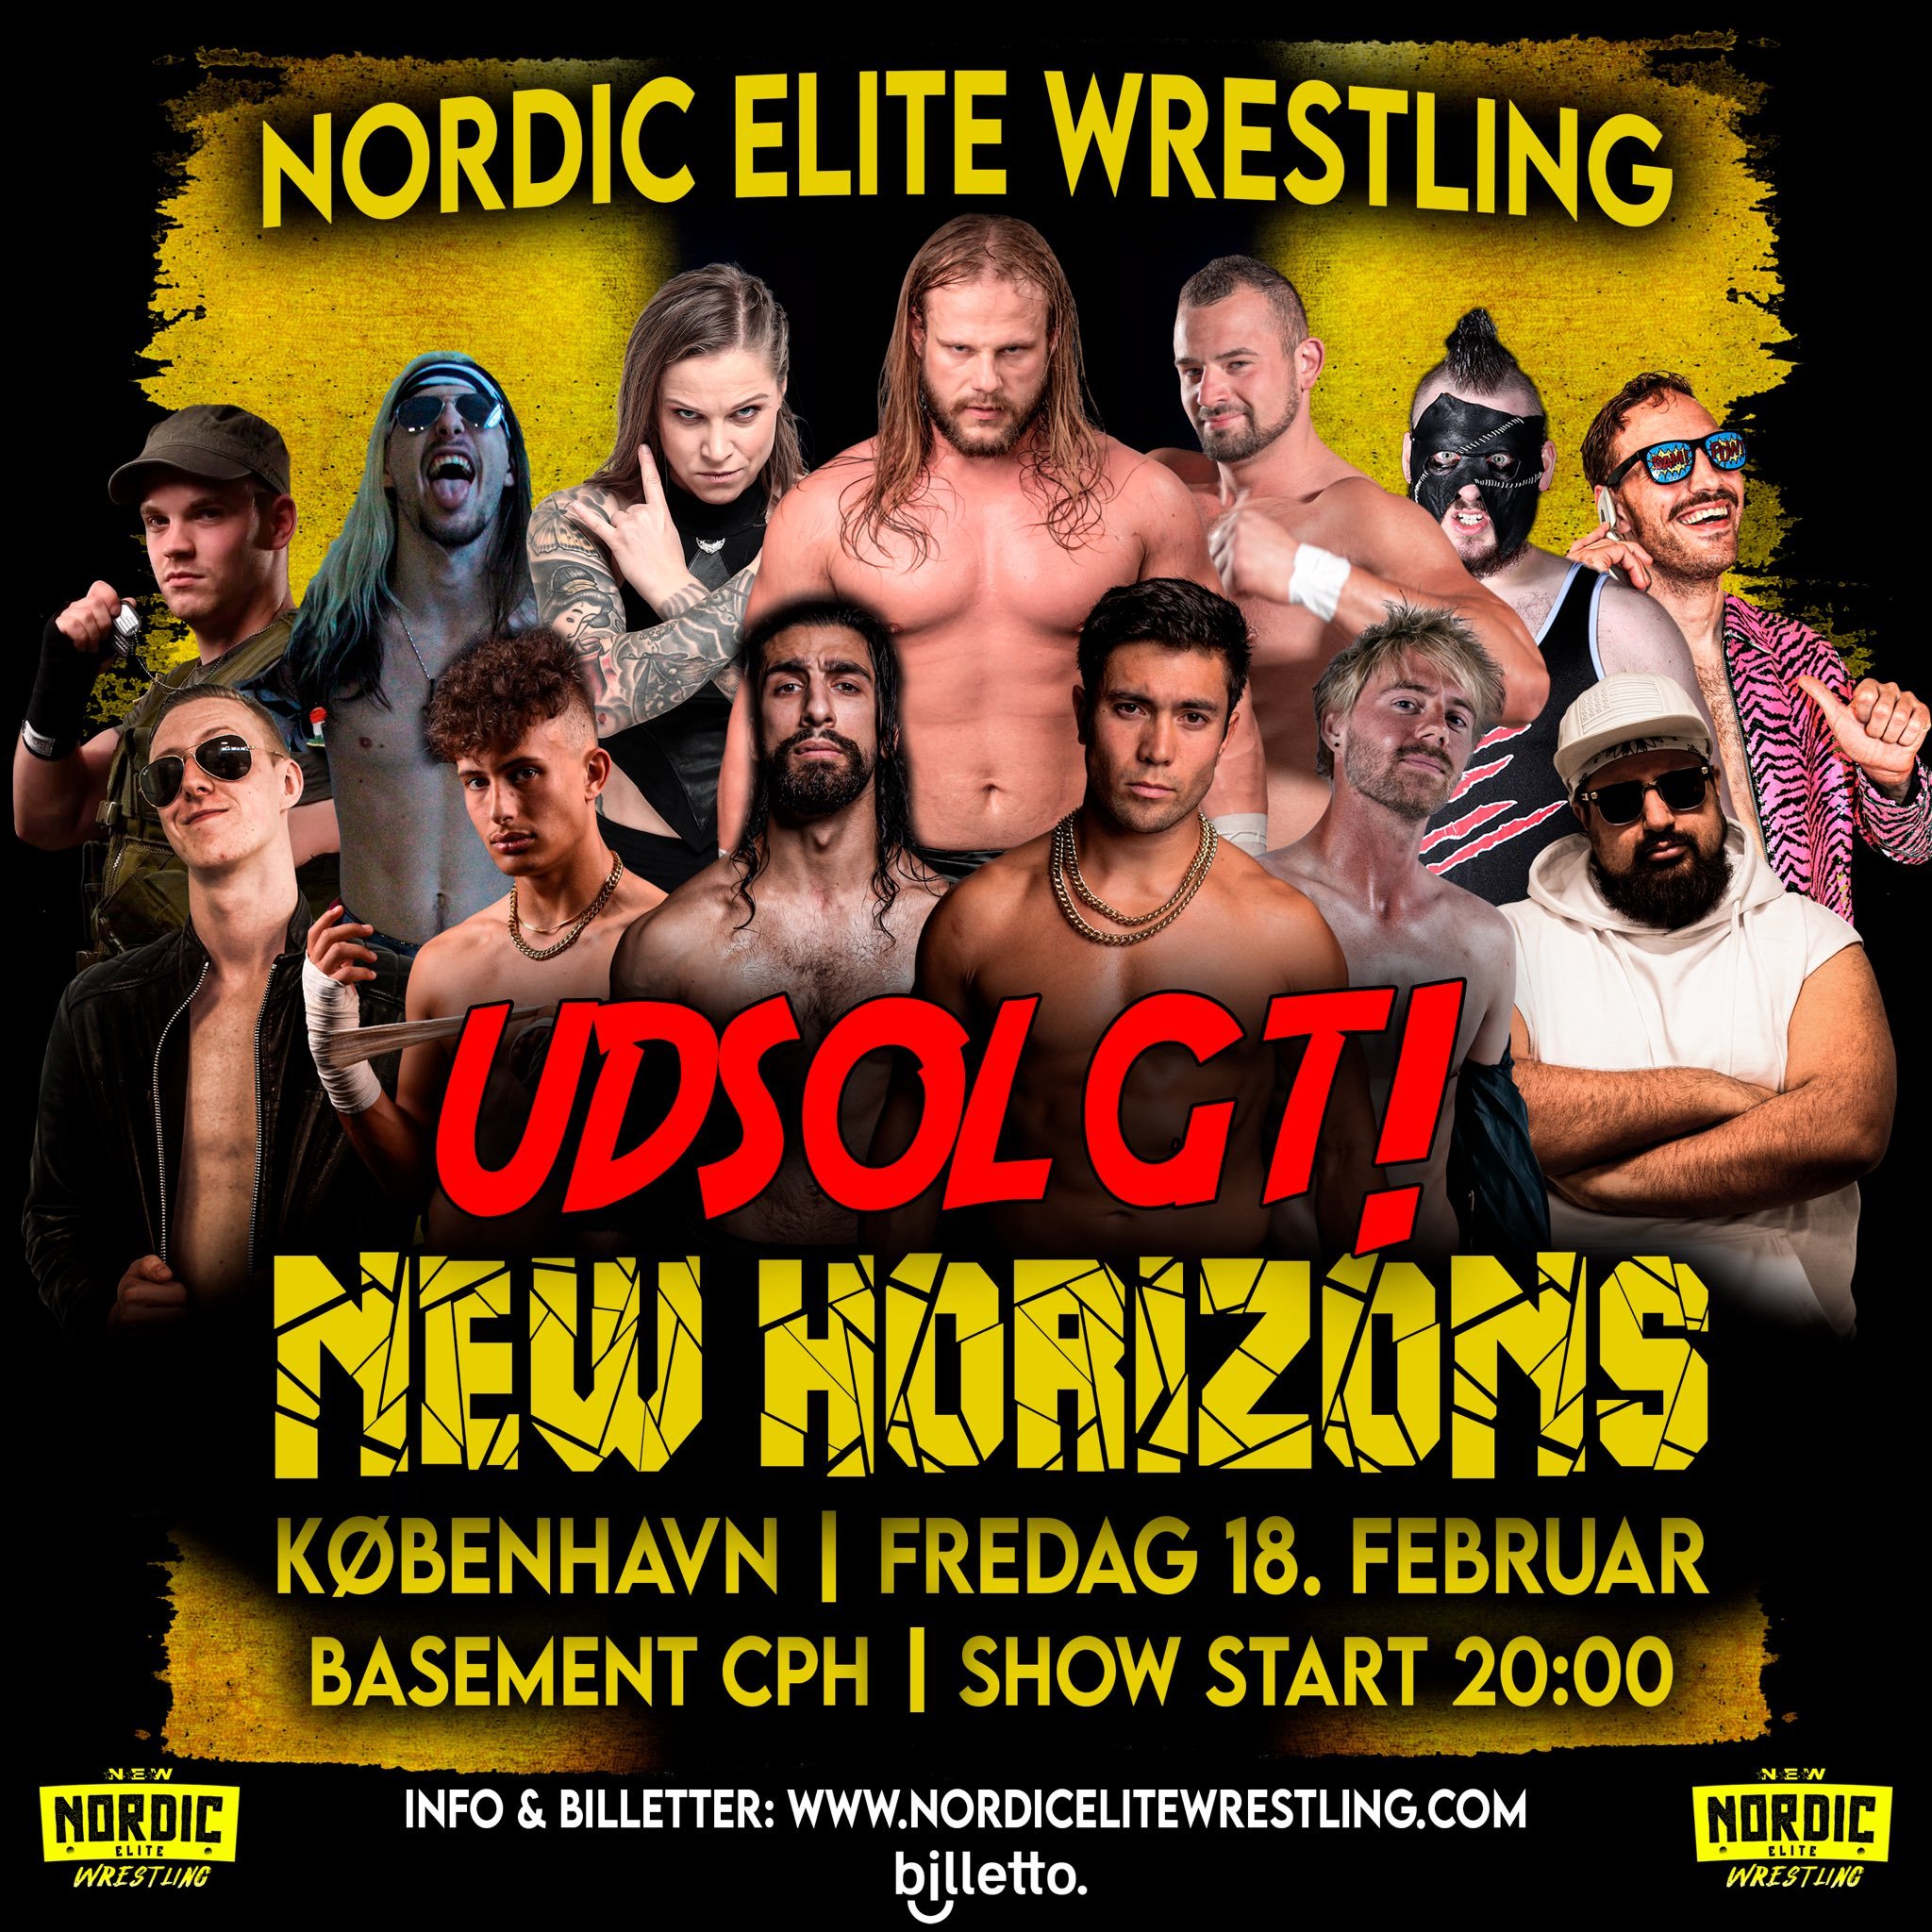 Nordic Elite Wrestling sells out debut show as Danish wrestling